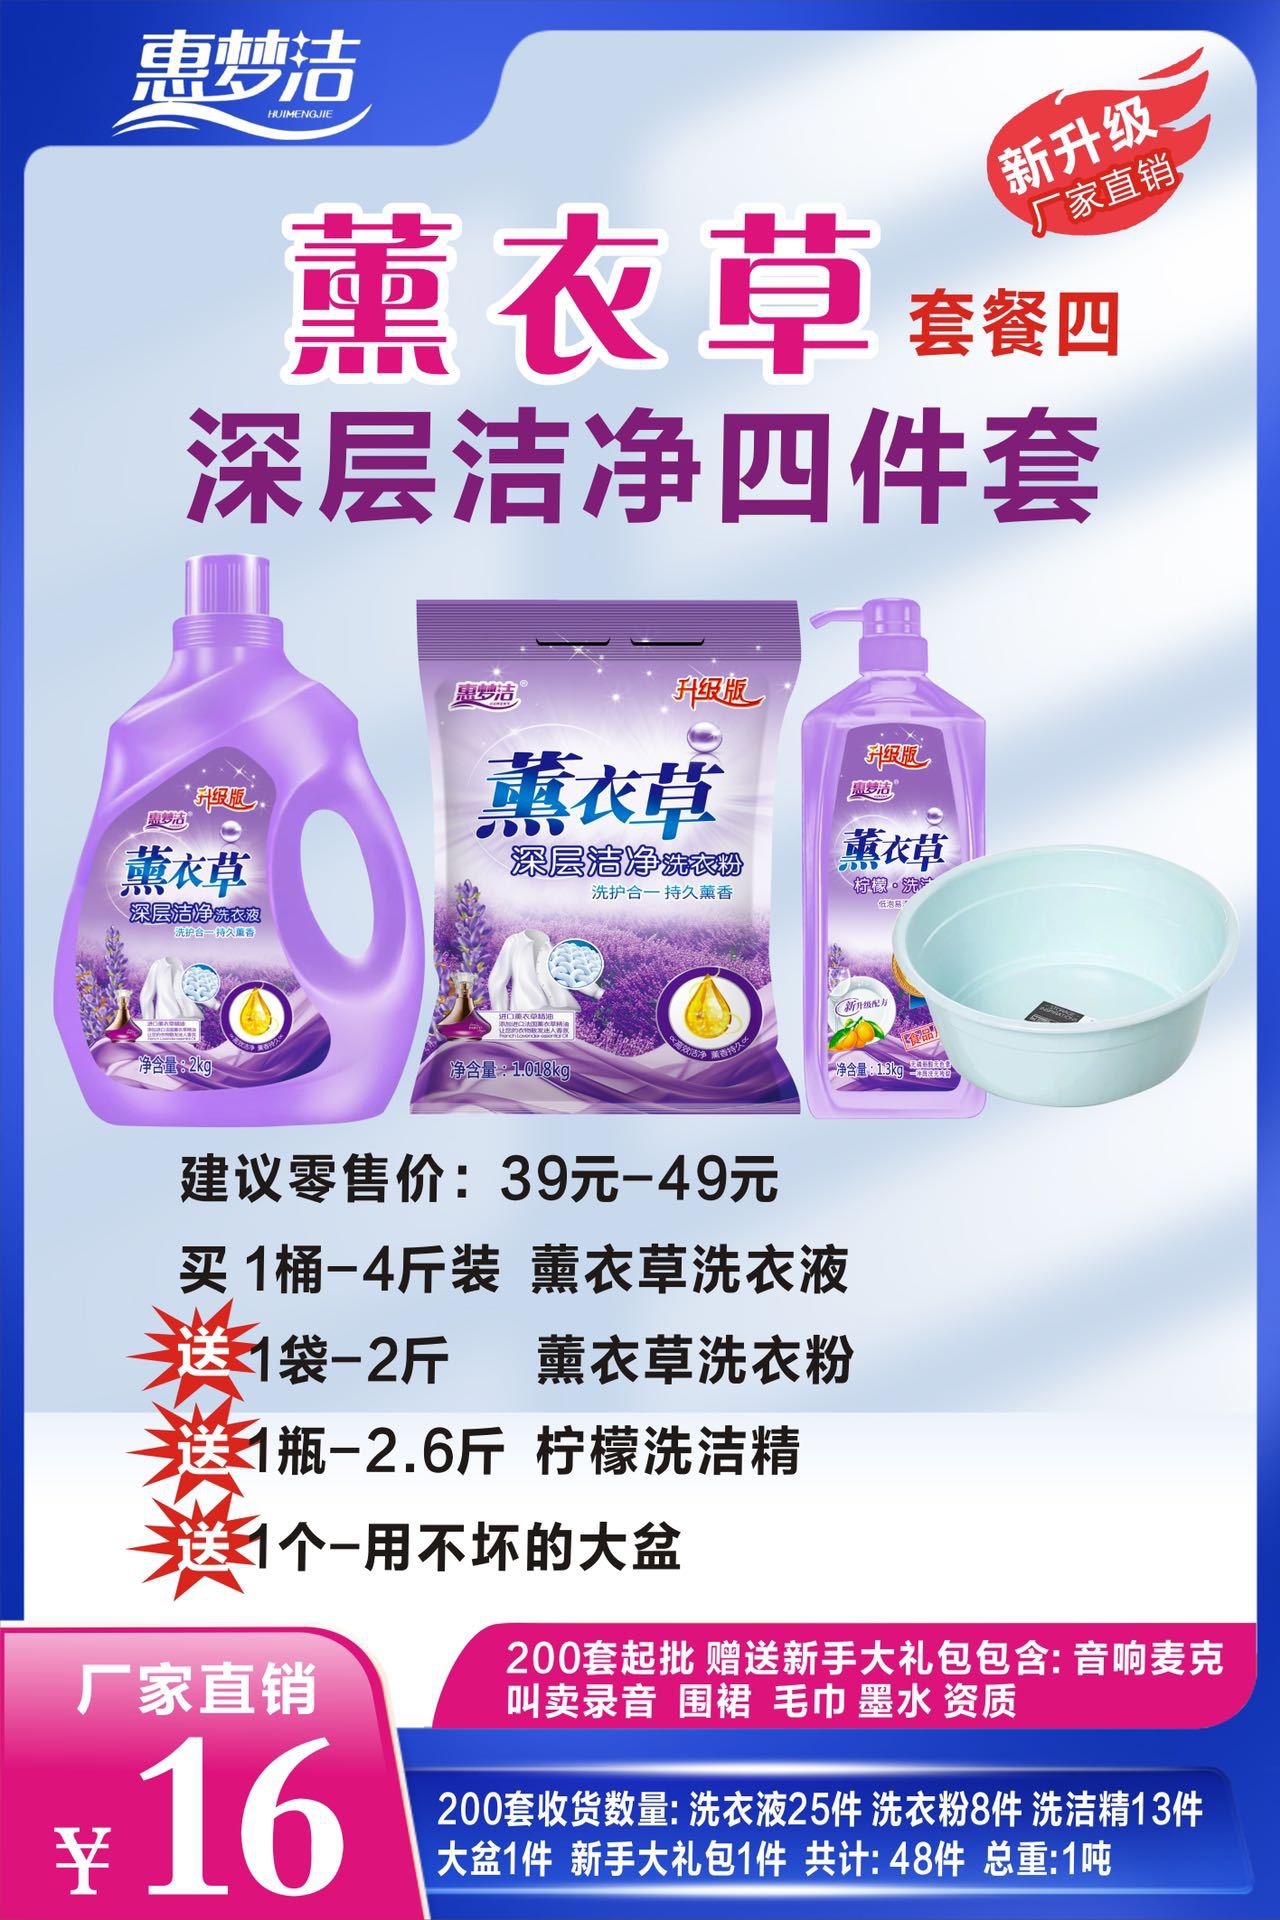 Stall, Jihui, Mengjie, Lavender Laundry Detergent, Daily Chemical Four-Piece Set, Washing Powder Set, Detergent, Free Drop-Resistant Basin